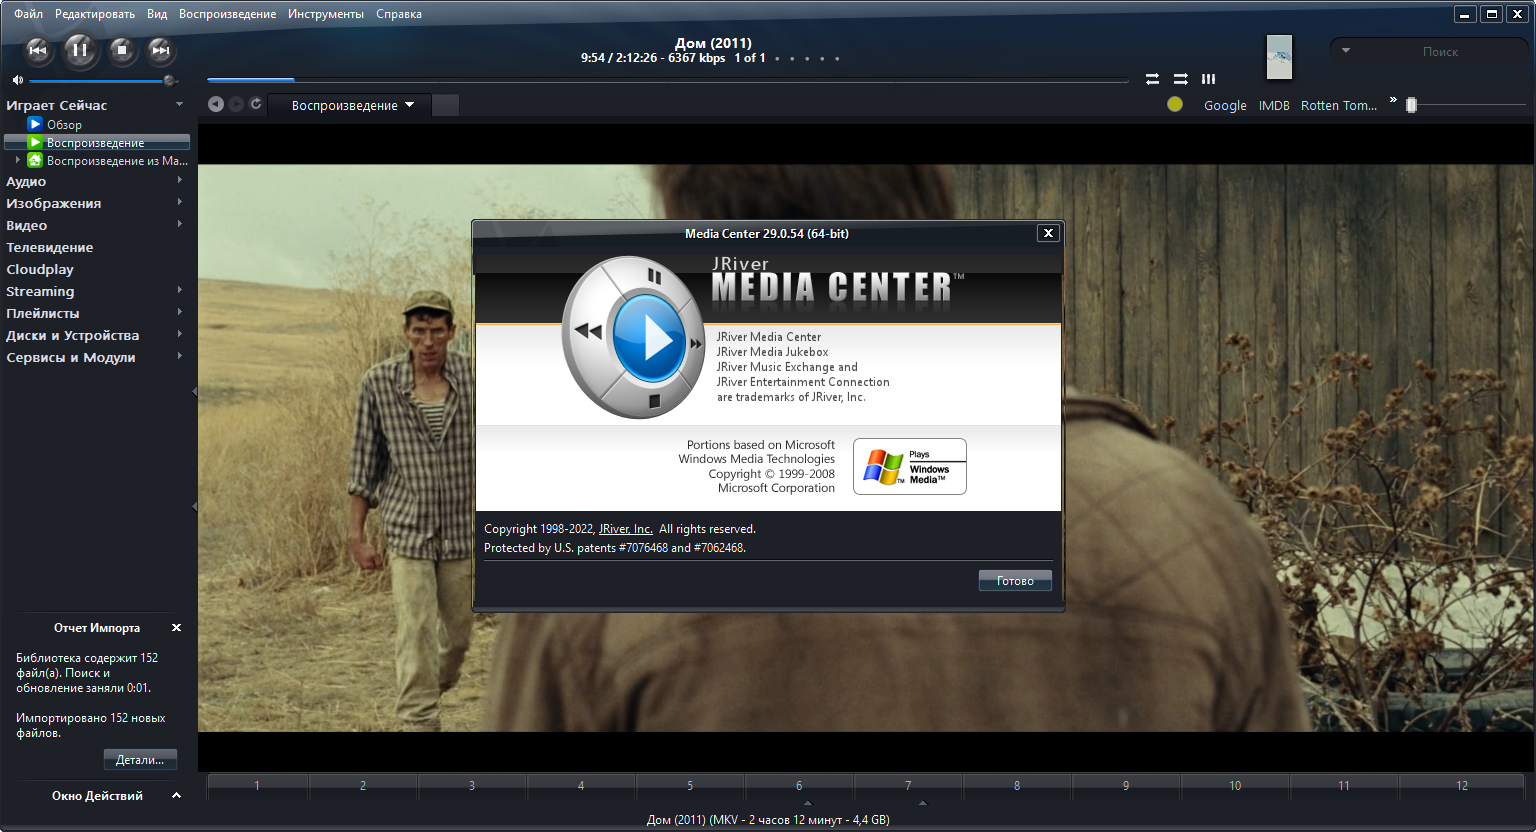 JRiver Media Center 31.0.23 instal the new for ios